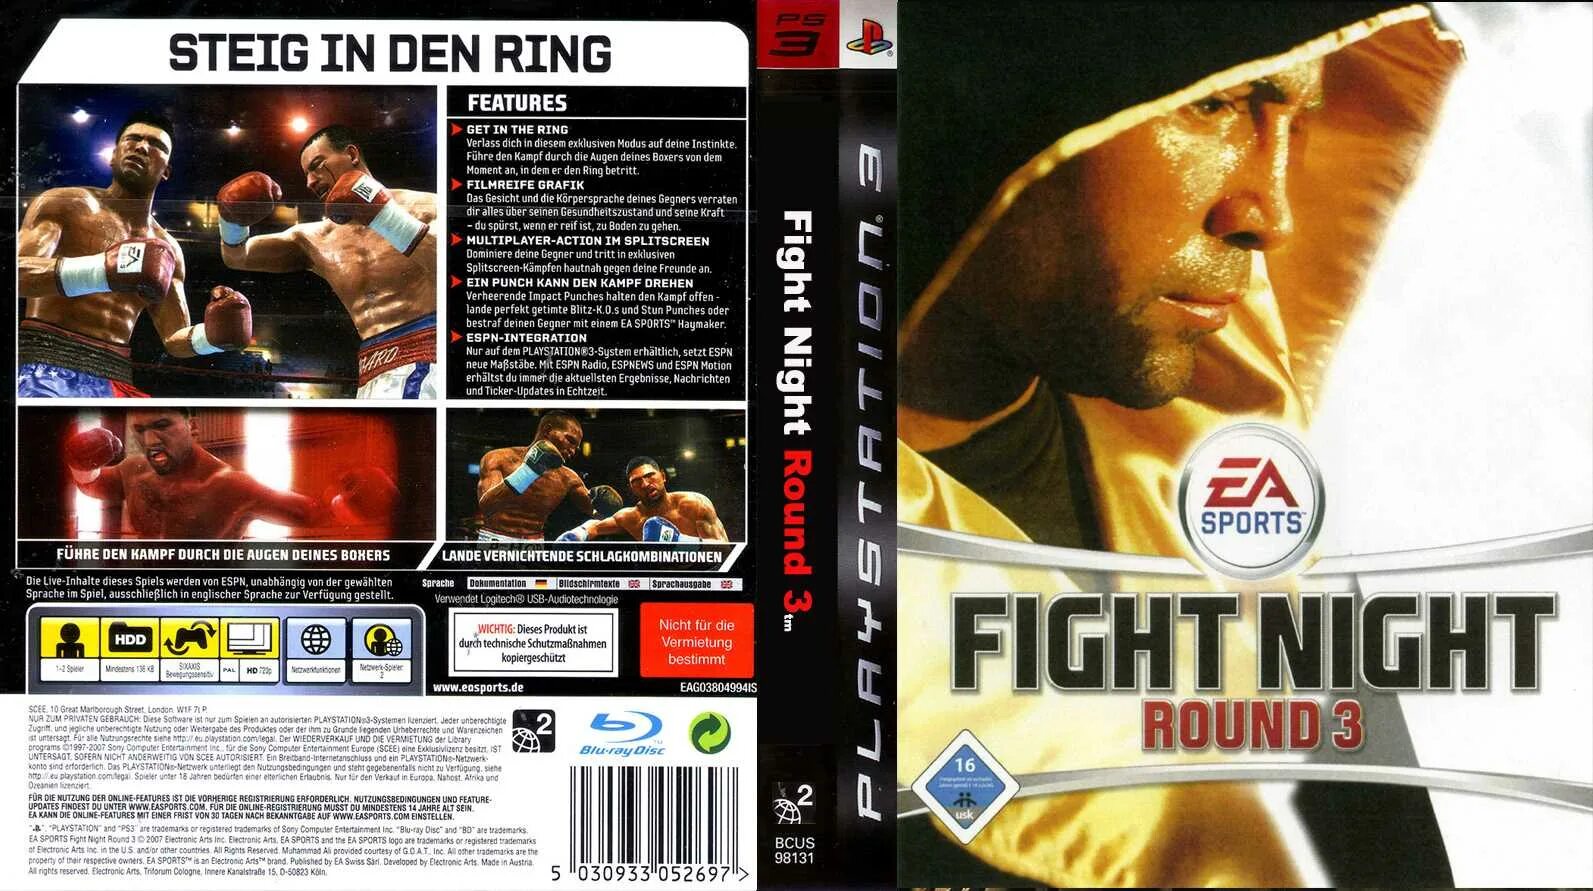 Fight Night Round 4 ps3 обложка. Fight Night Round 3 ps3 диск. Fight Night Round 3 (ps3). Fight Night Round 3 ps3 обложка.